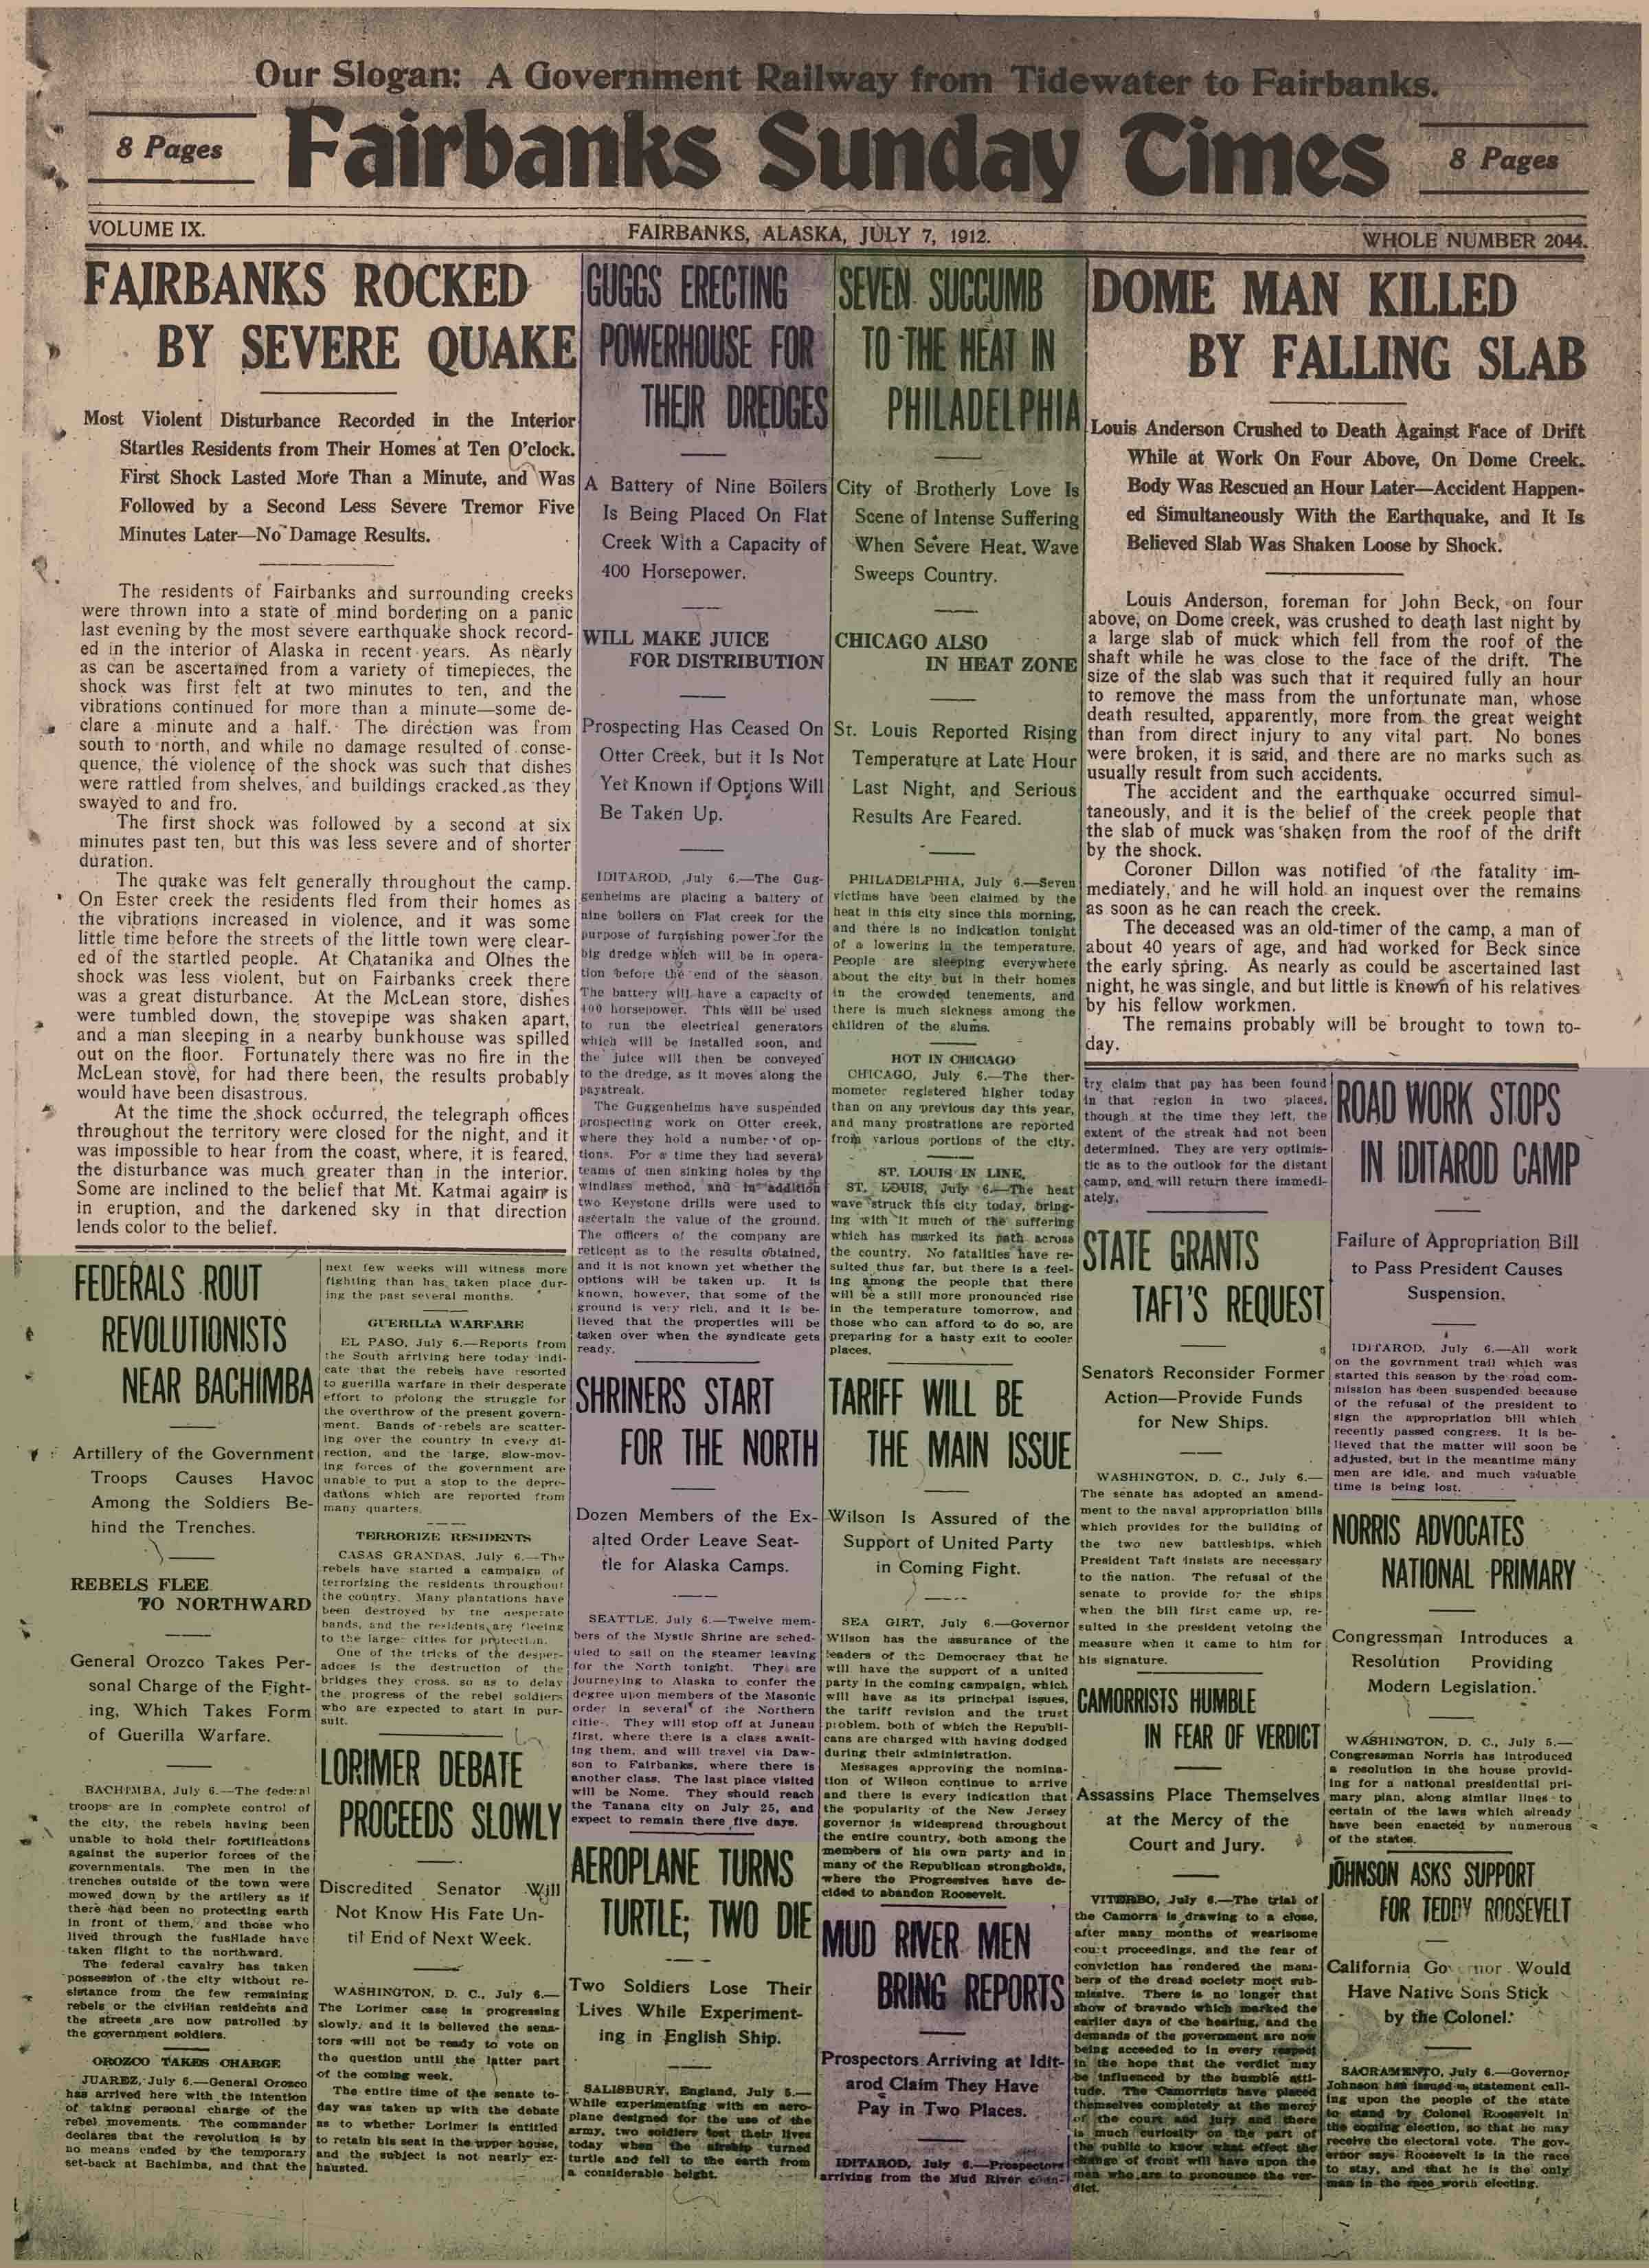 1912 July 7, Fairbanks Sunday Times (pg 1)